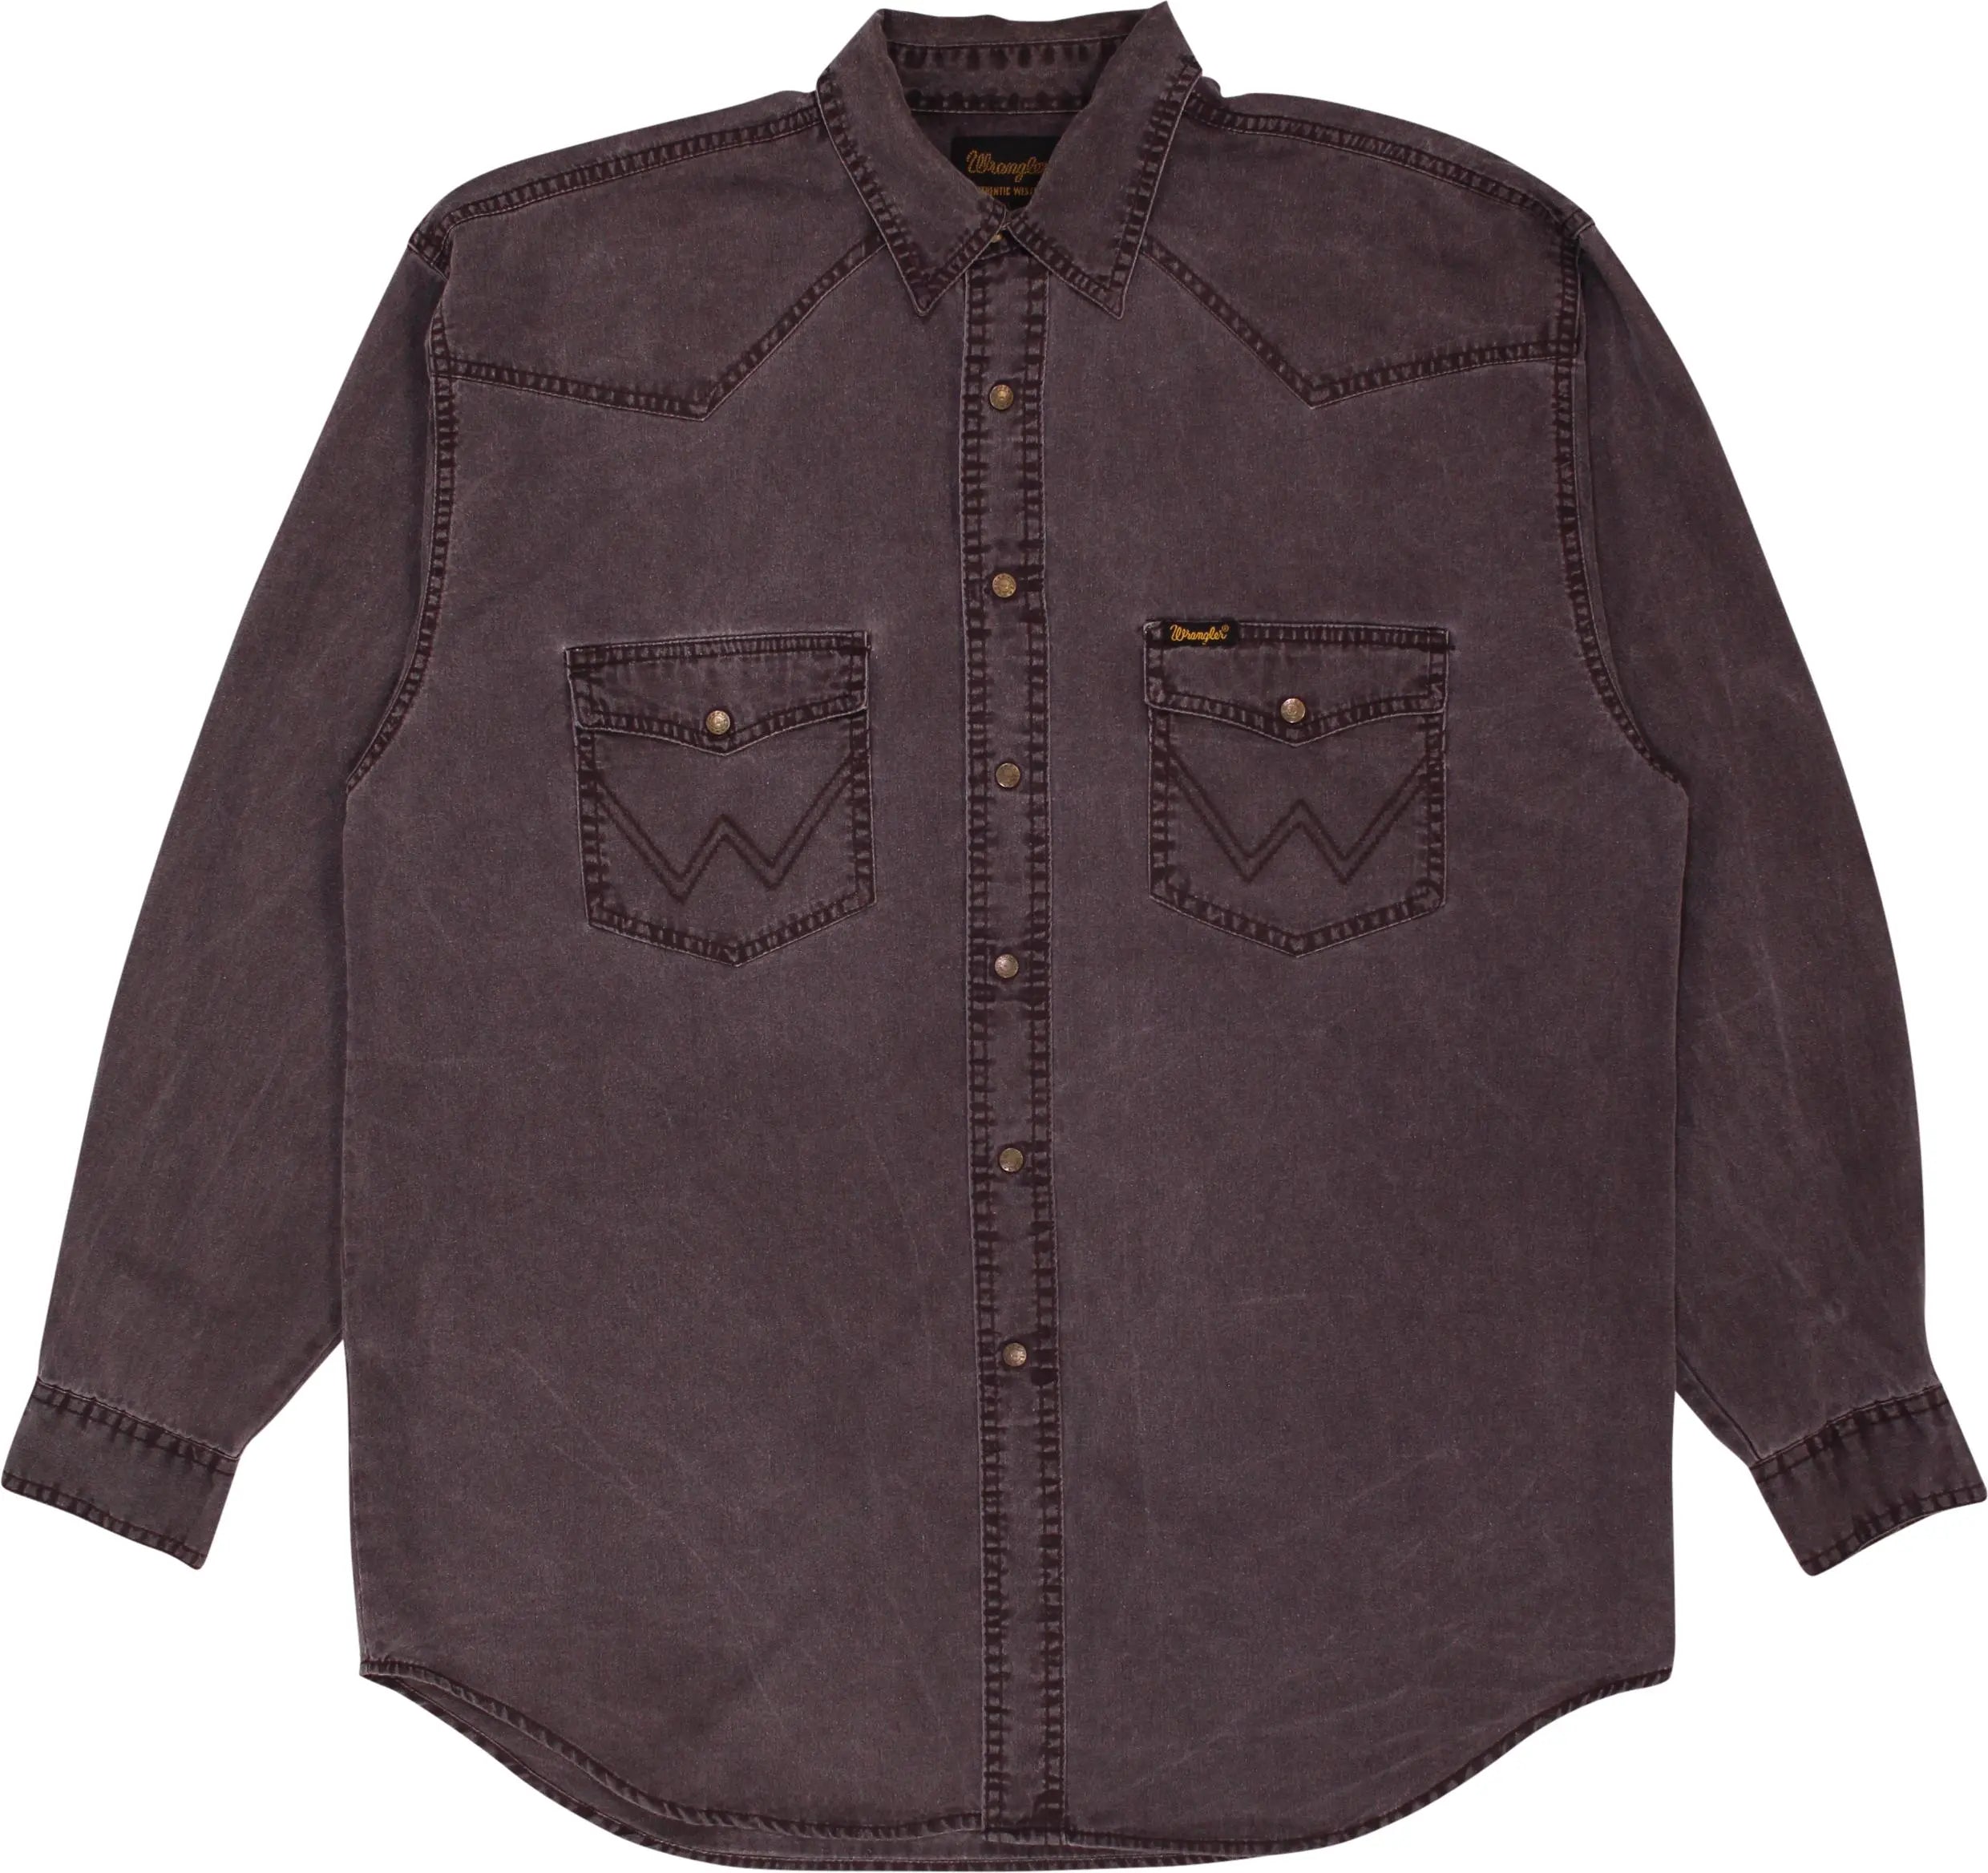 Wrangler - 90s Wrangler Oversized Denim Shirt- ThriftTale.com - Vintage and second handclothing